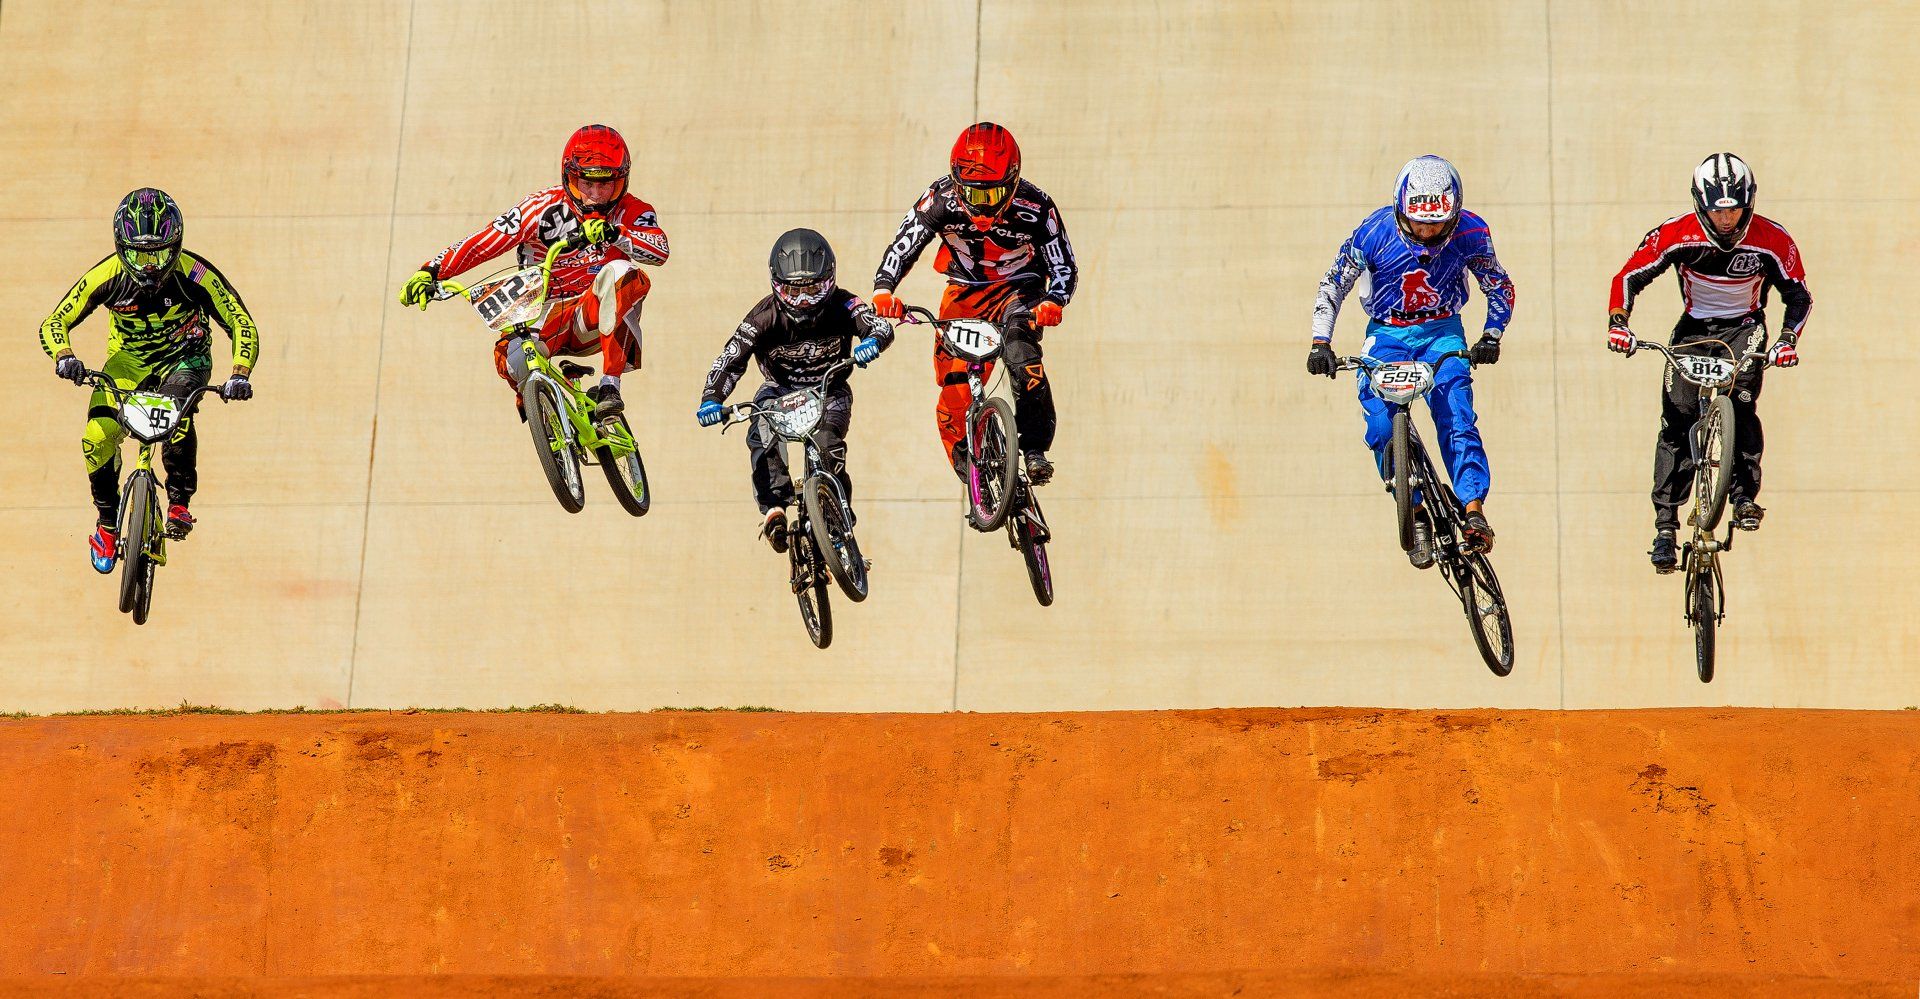 Racers jump during a Community hospital Novant Health's BMX event